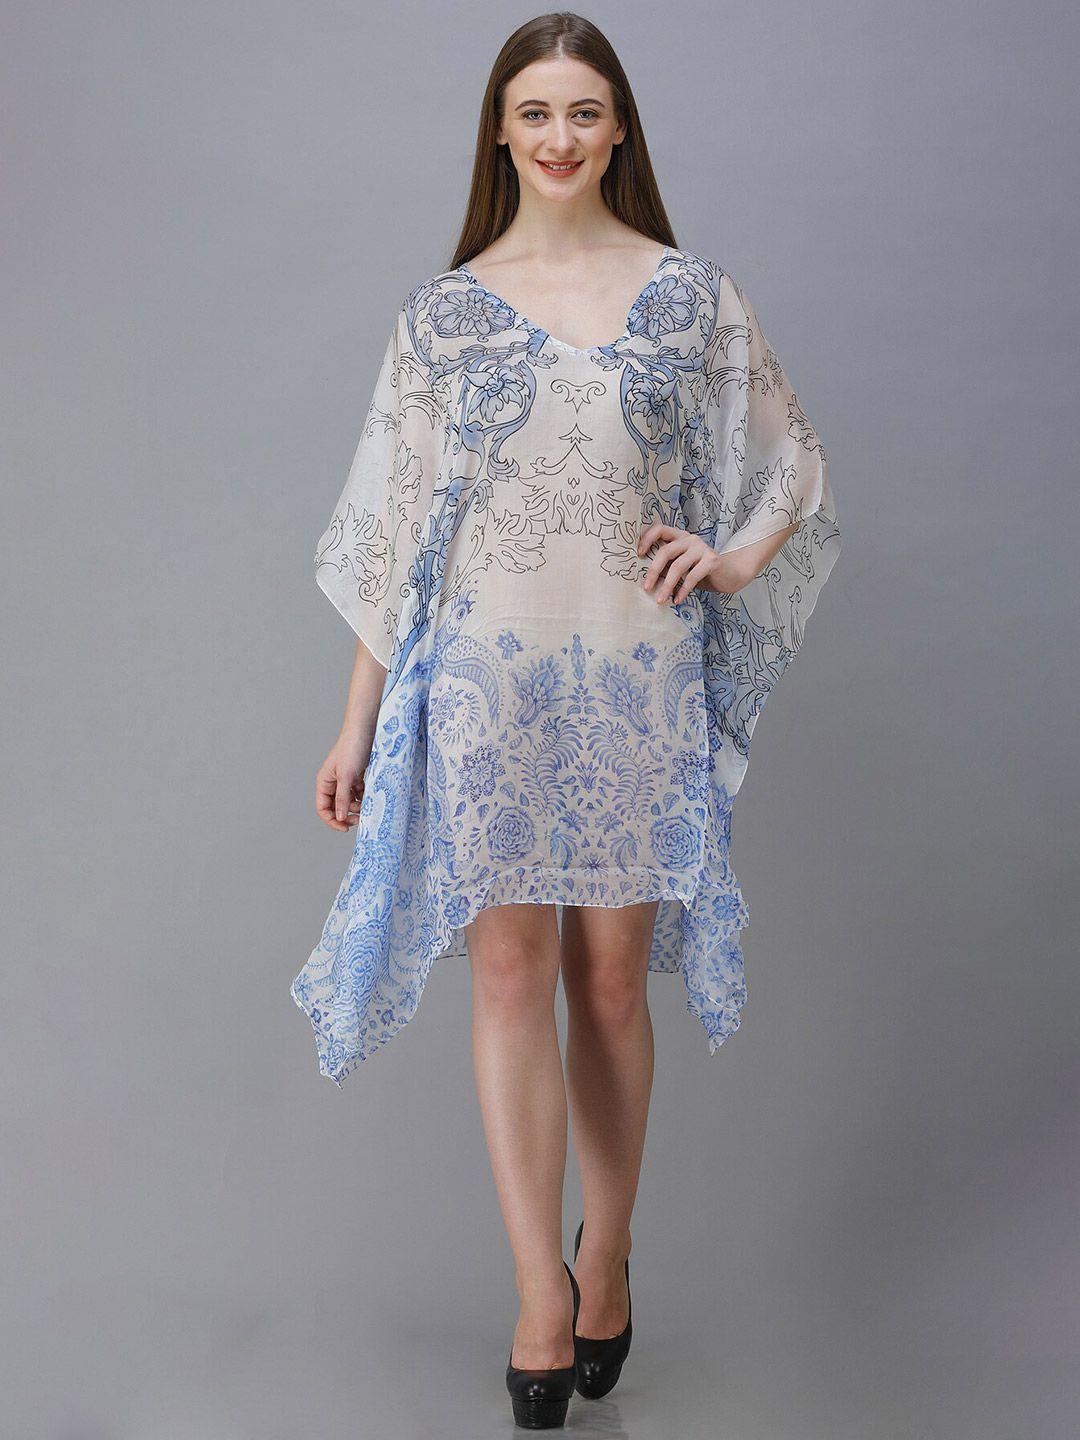 rajoria instyle off white & blue ethnic motifs georgette kaftan dress